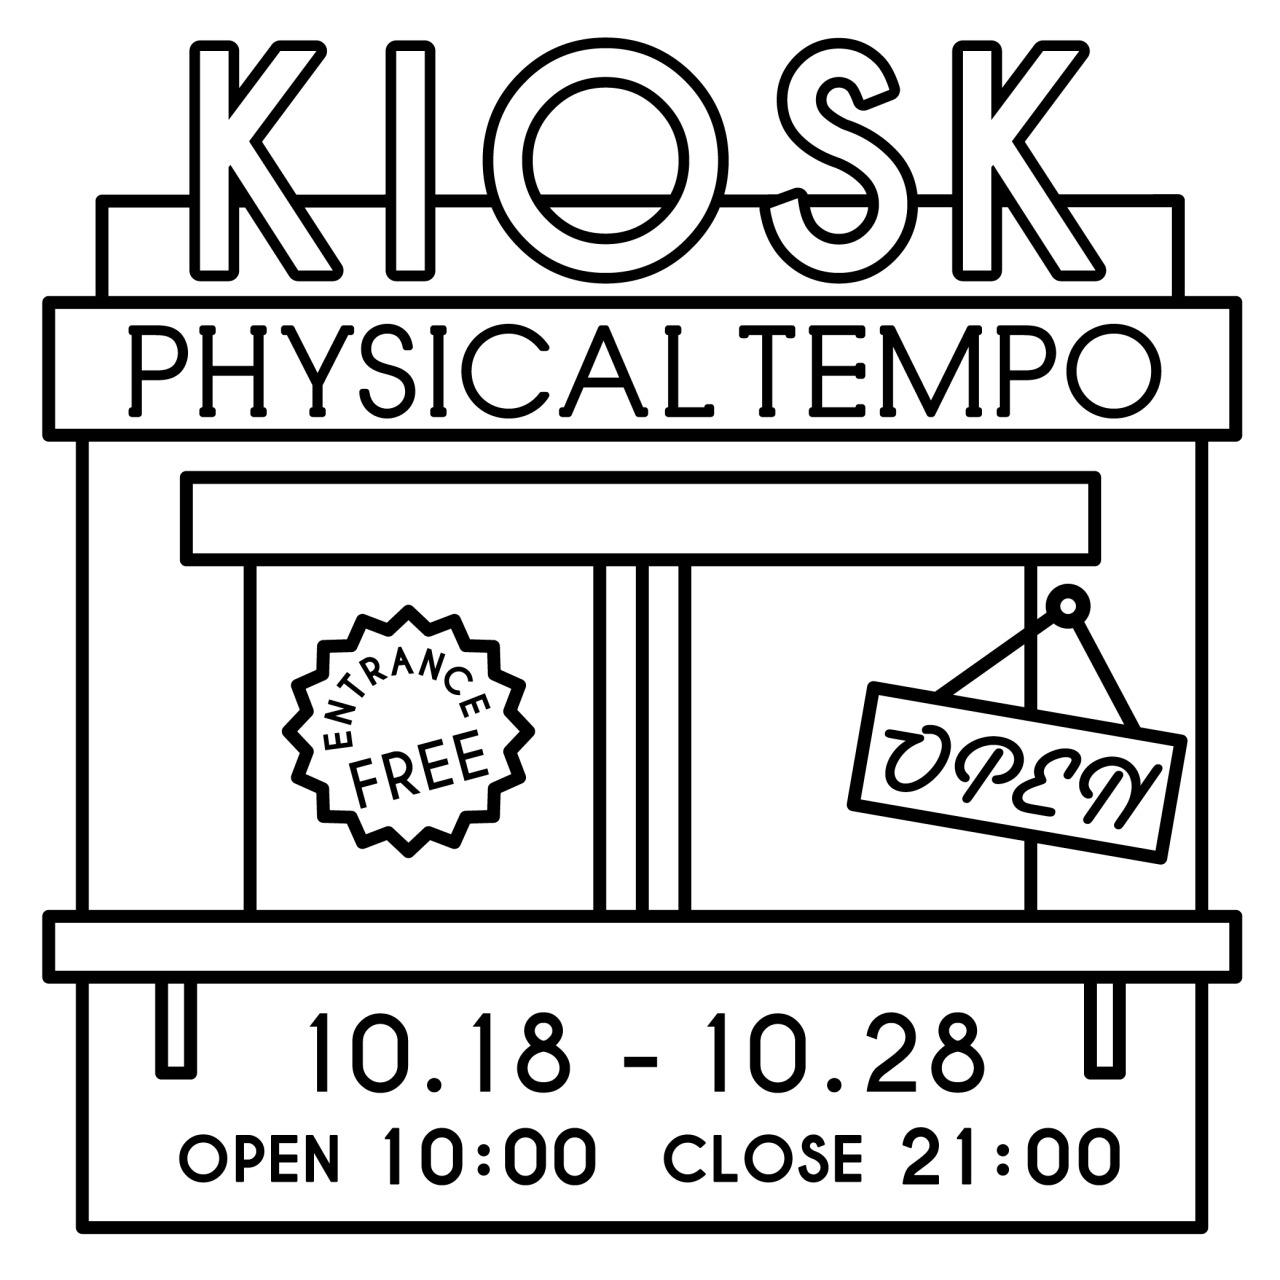 (via 【予告】開催決定「PHYSICAL TEMPO KIOSK」at シブカル祭。2013 | PHYSICAL TEMPO)